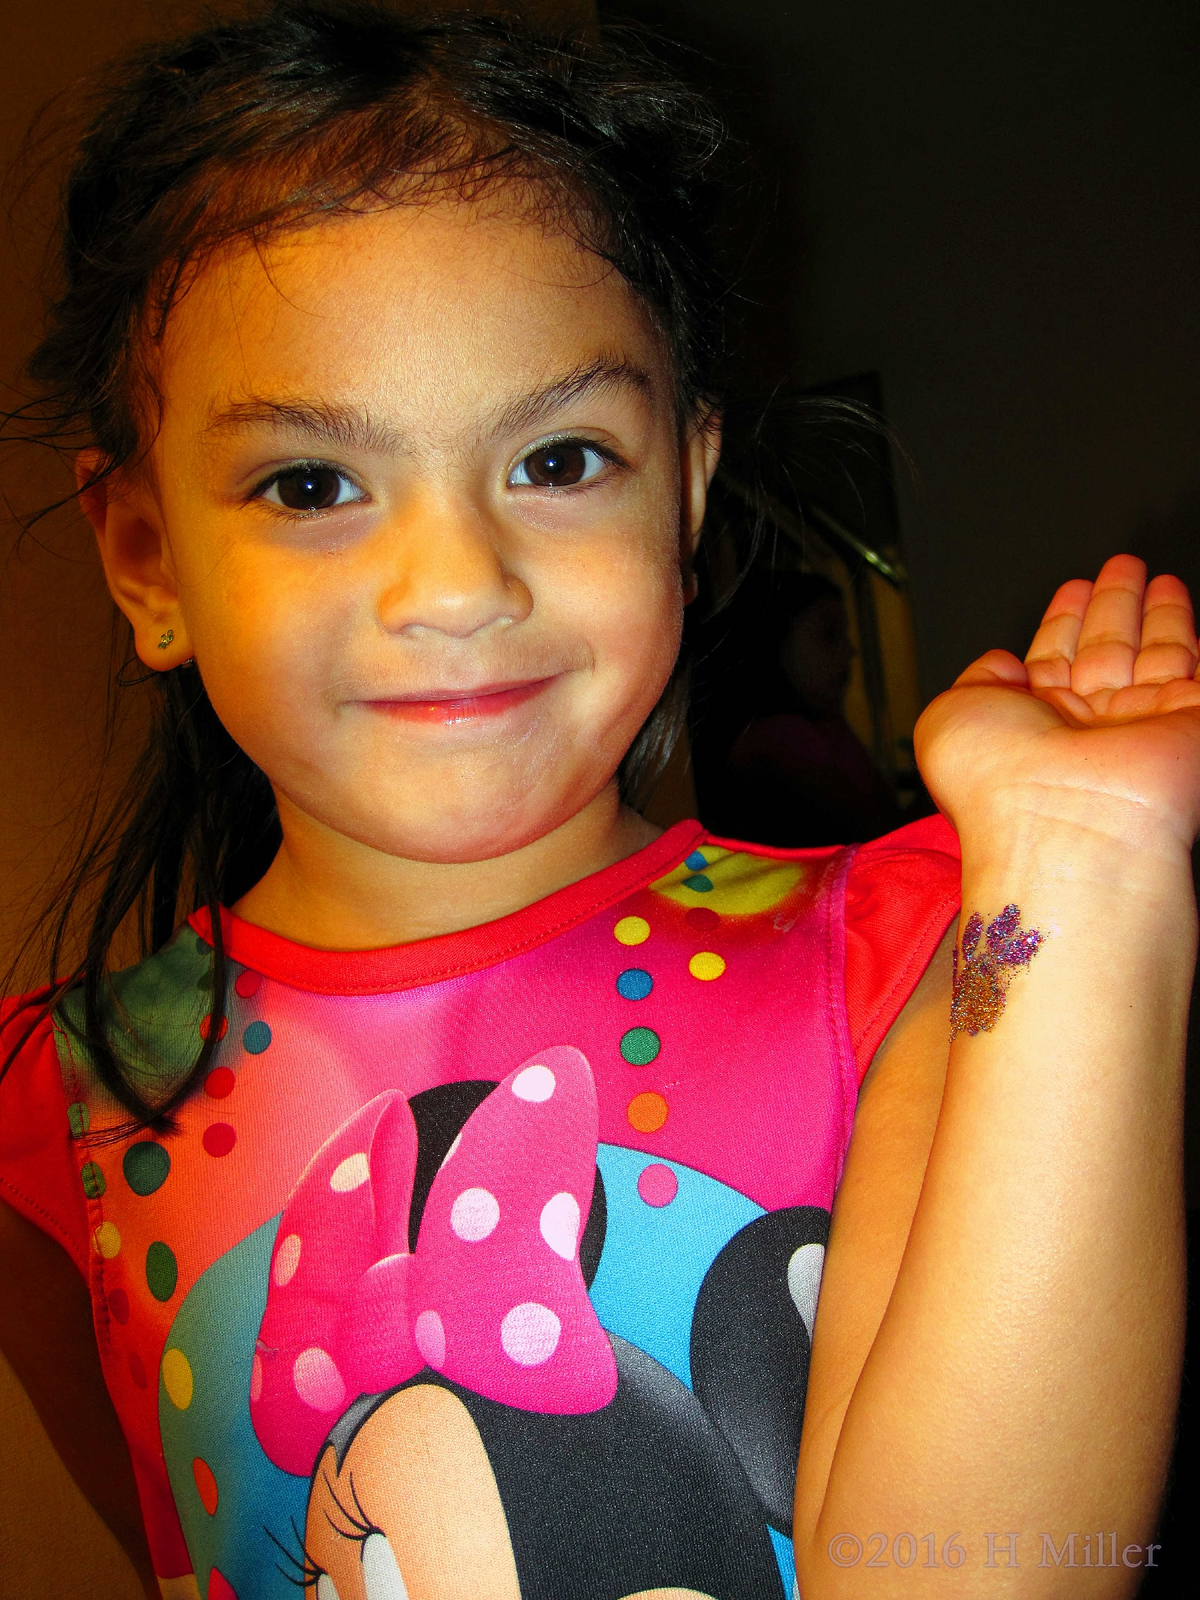 She Loves Her Cute Glittery Pawprint Temporary Tattoo! 